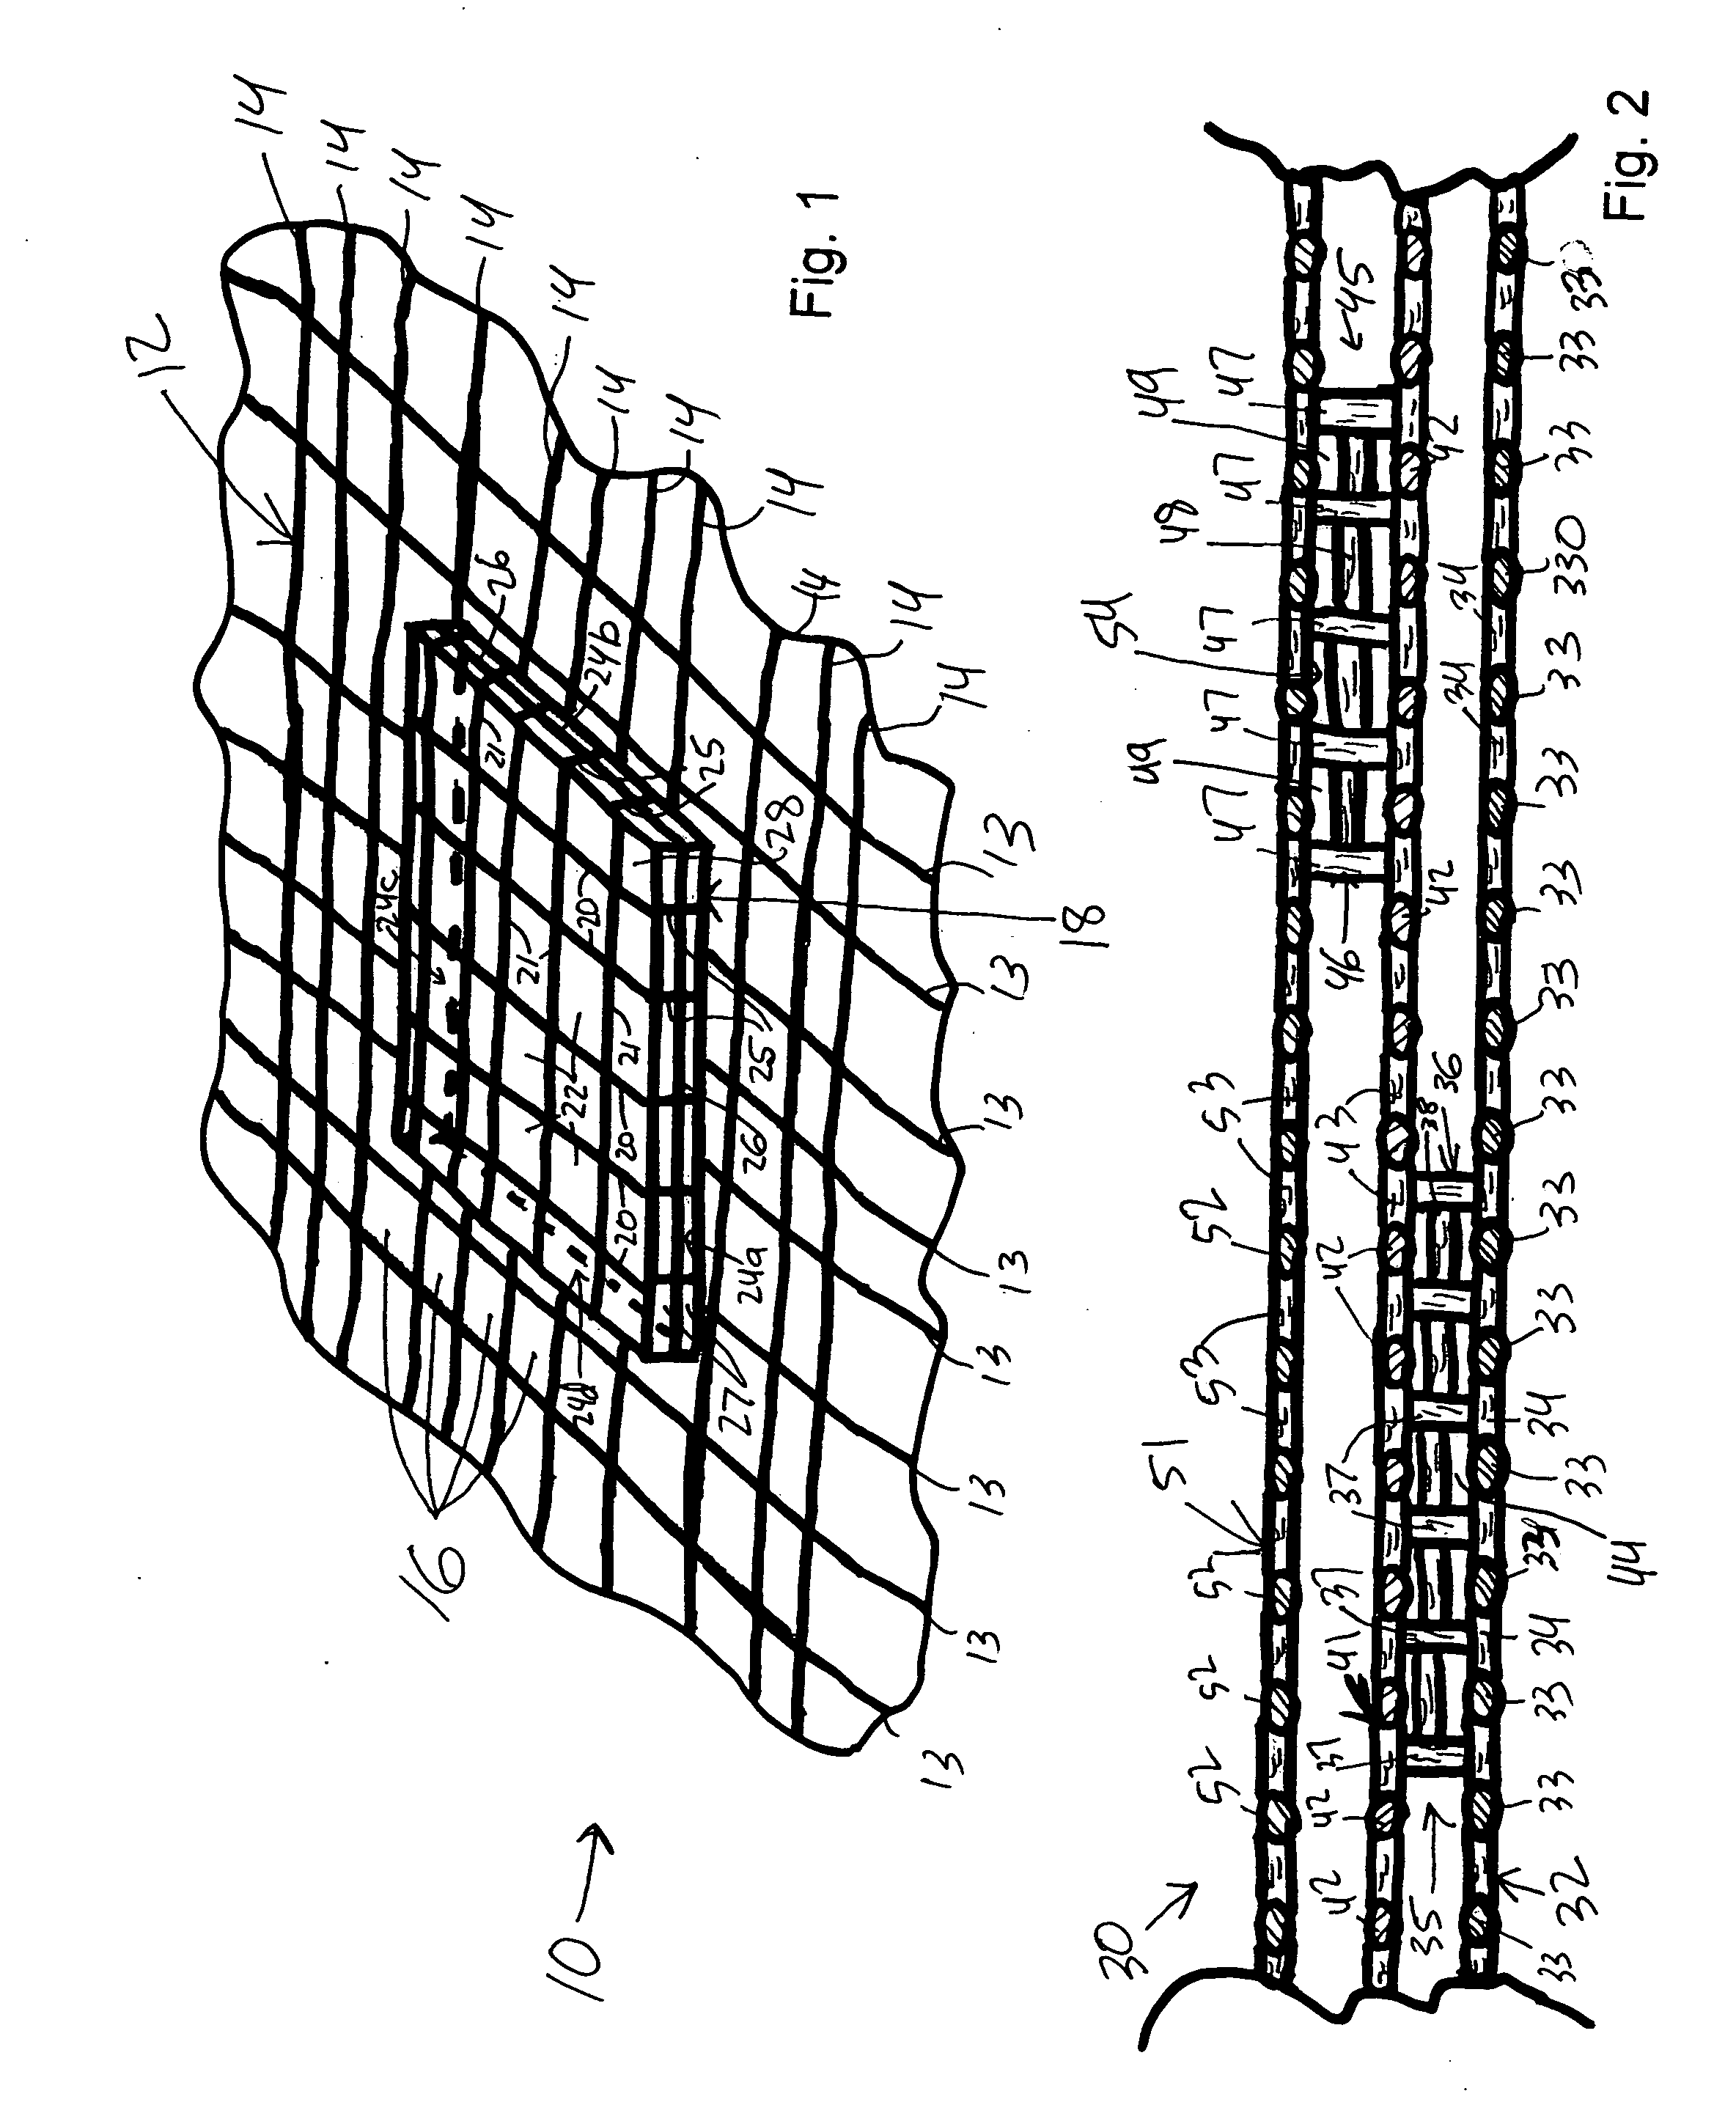 Porous three dimensional nest scaffolding